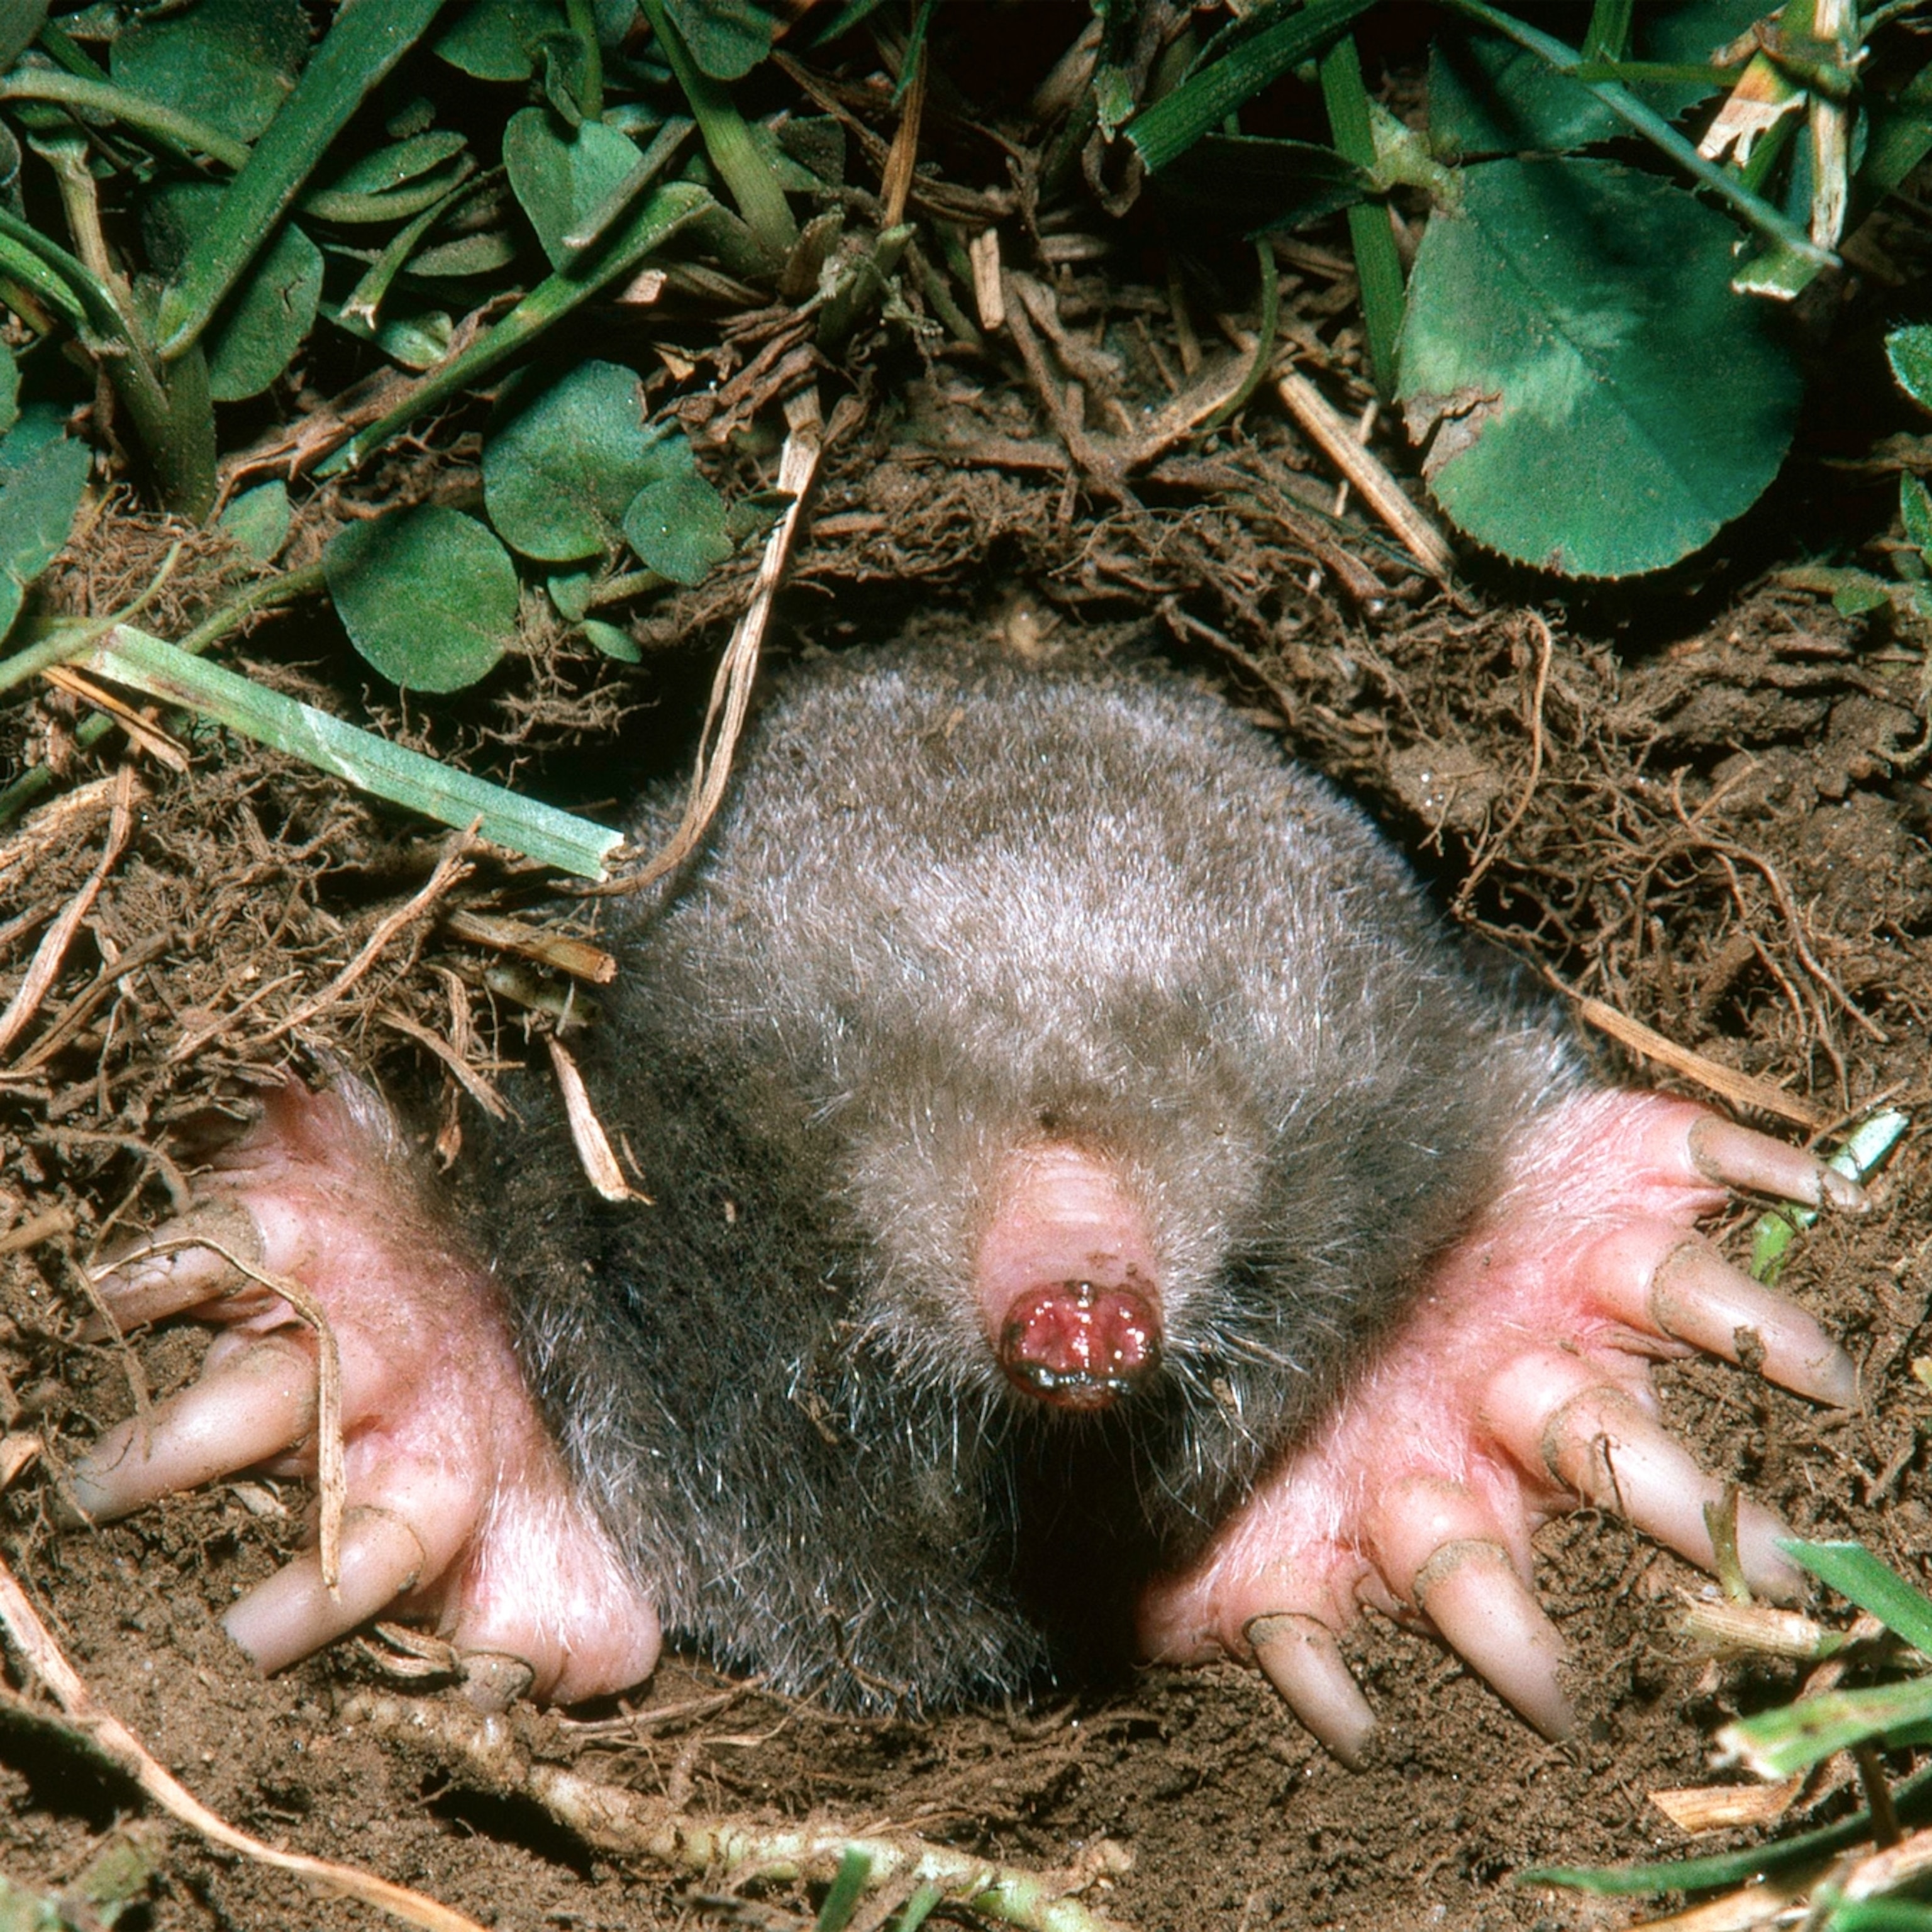 Do Moles Have Other Senses?